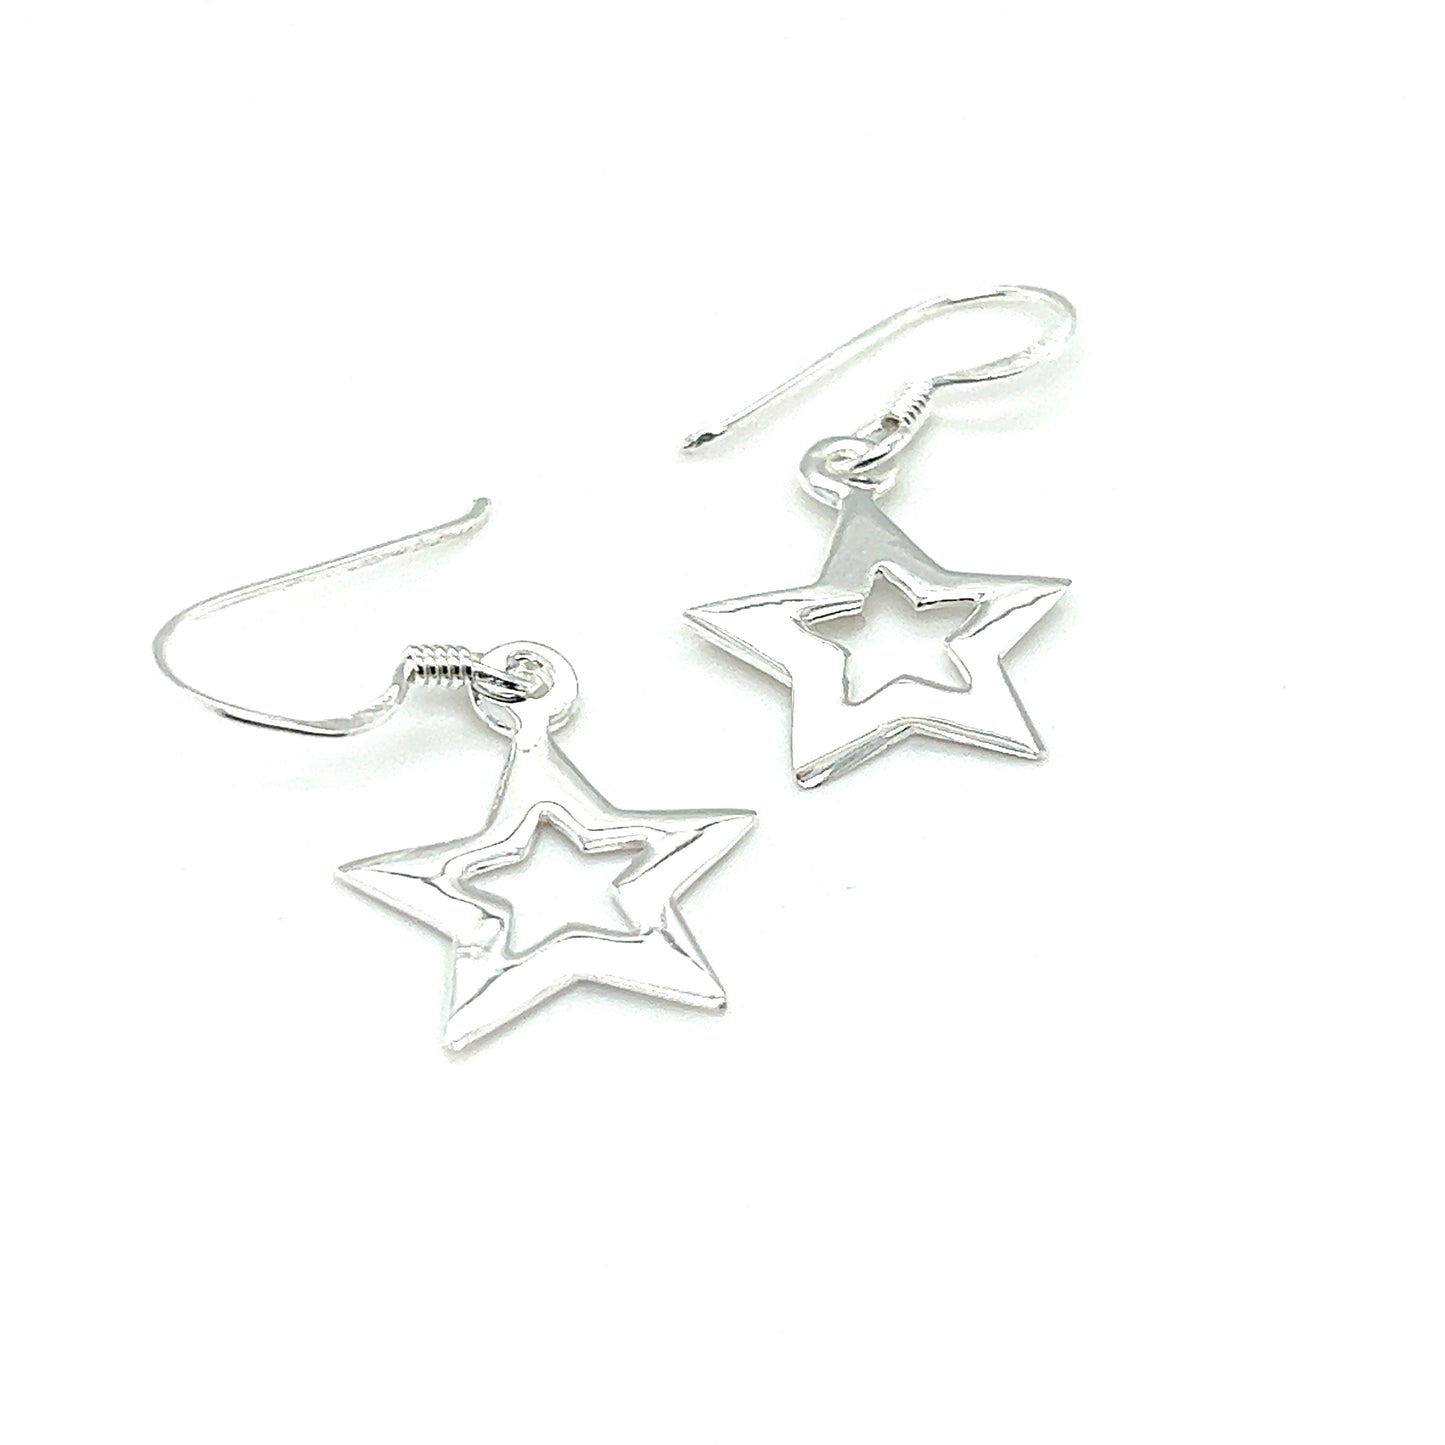 Open Super Silver Star Earrings with celestial splendor on a white background.